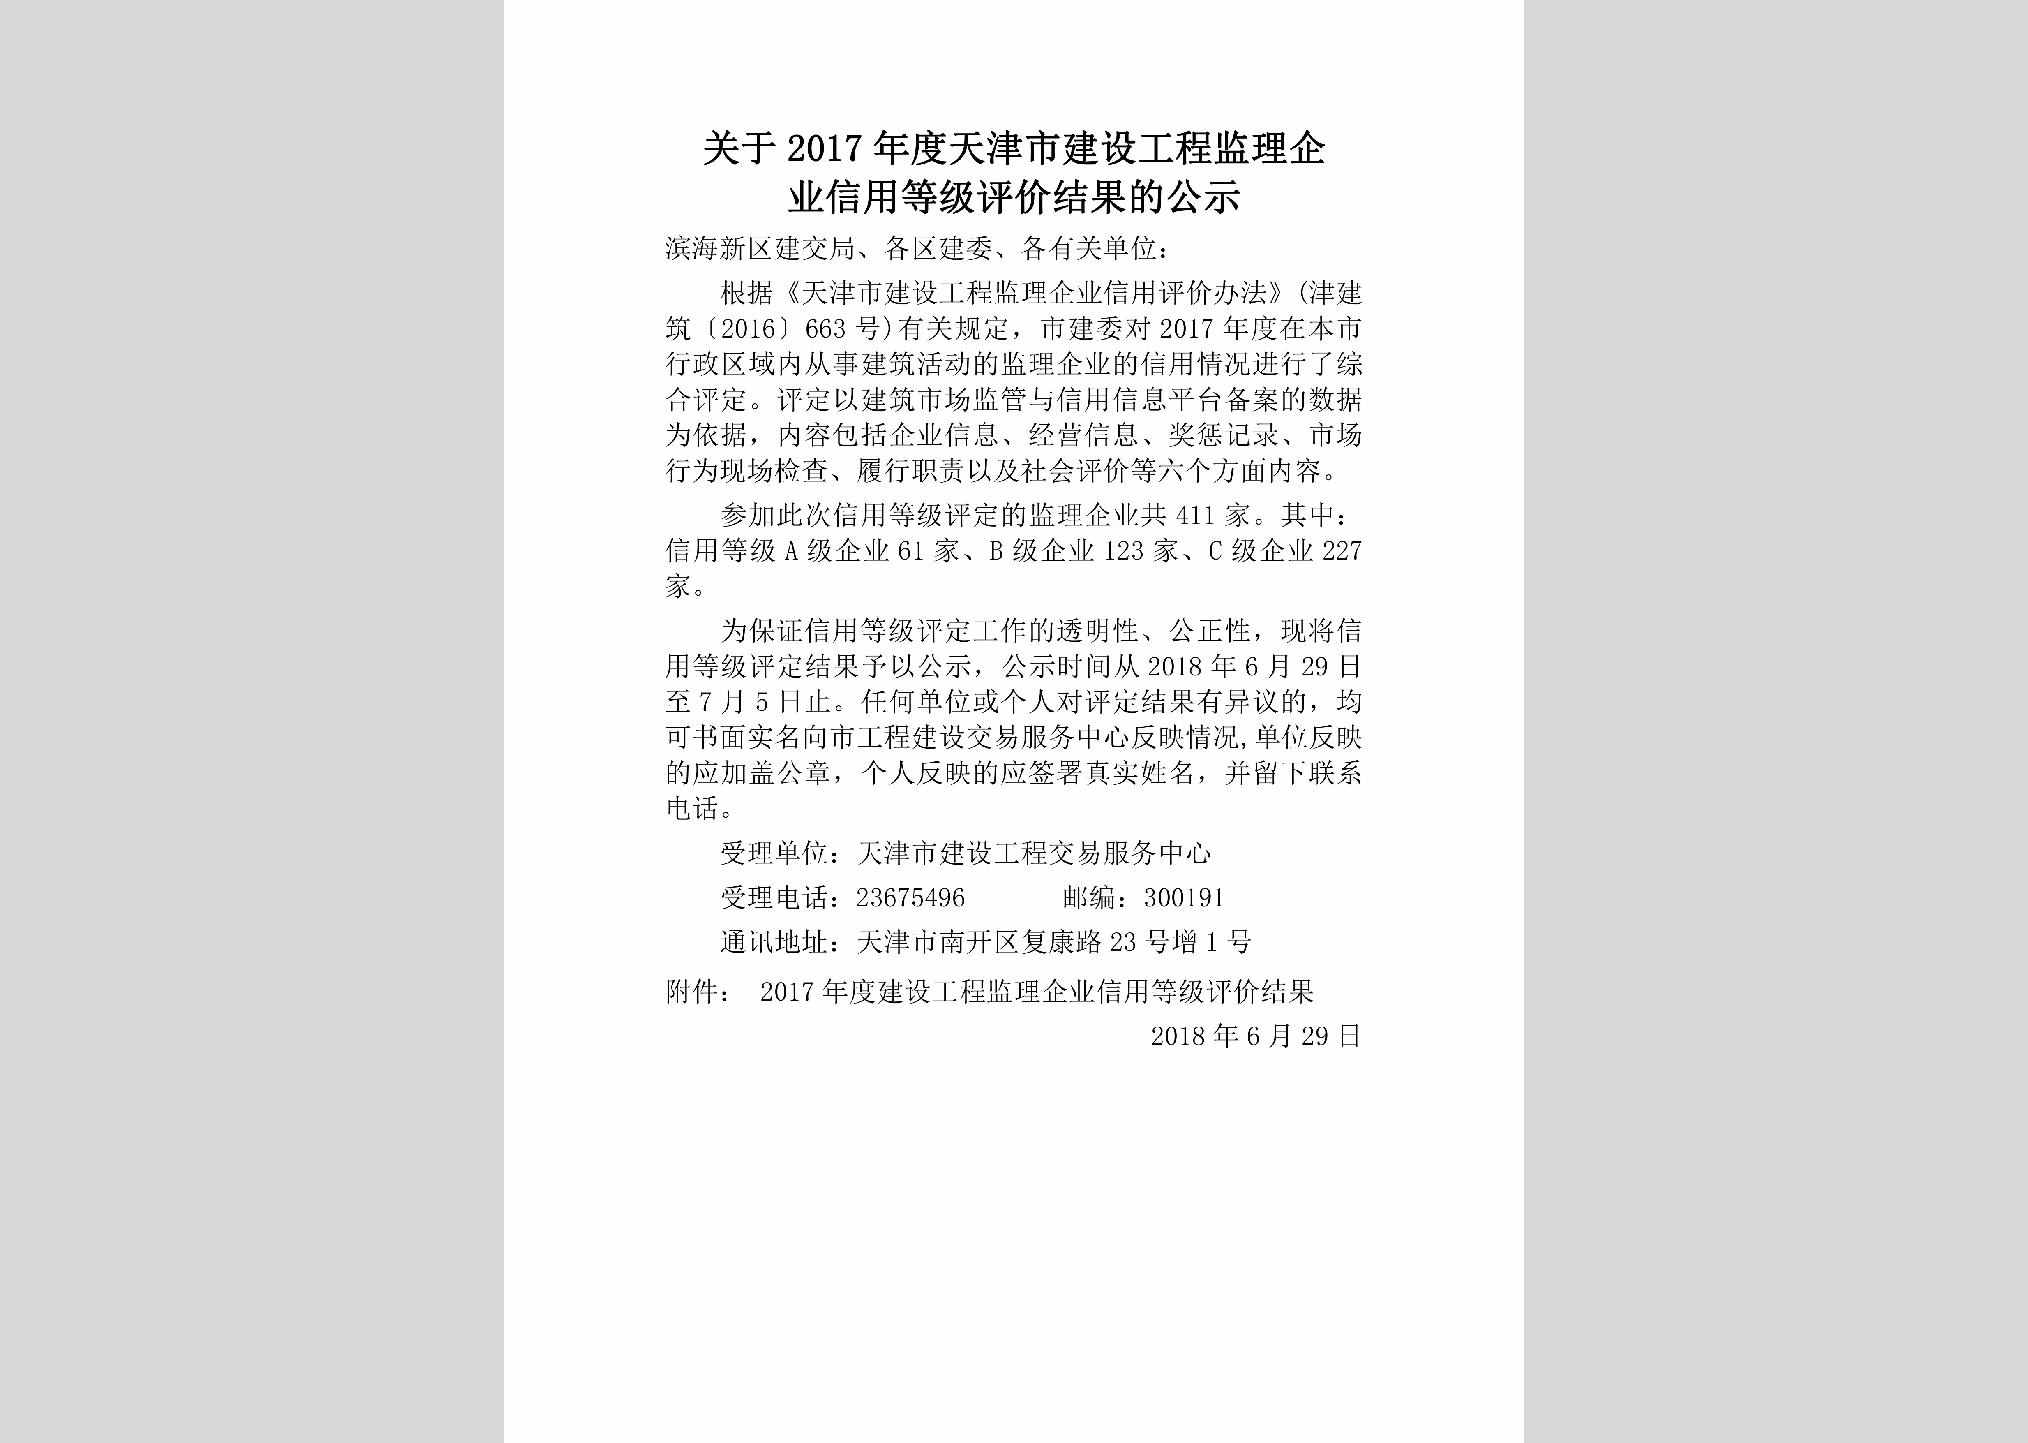 TJ-JZGCJLQY-2018：关于2017年度天津市建设工程监理企业信用等级评价结果的公示